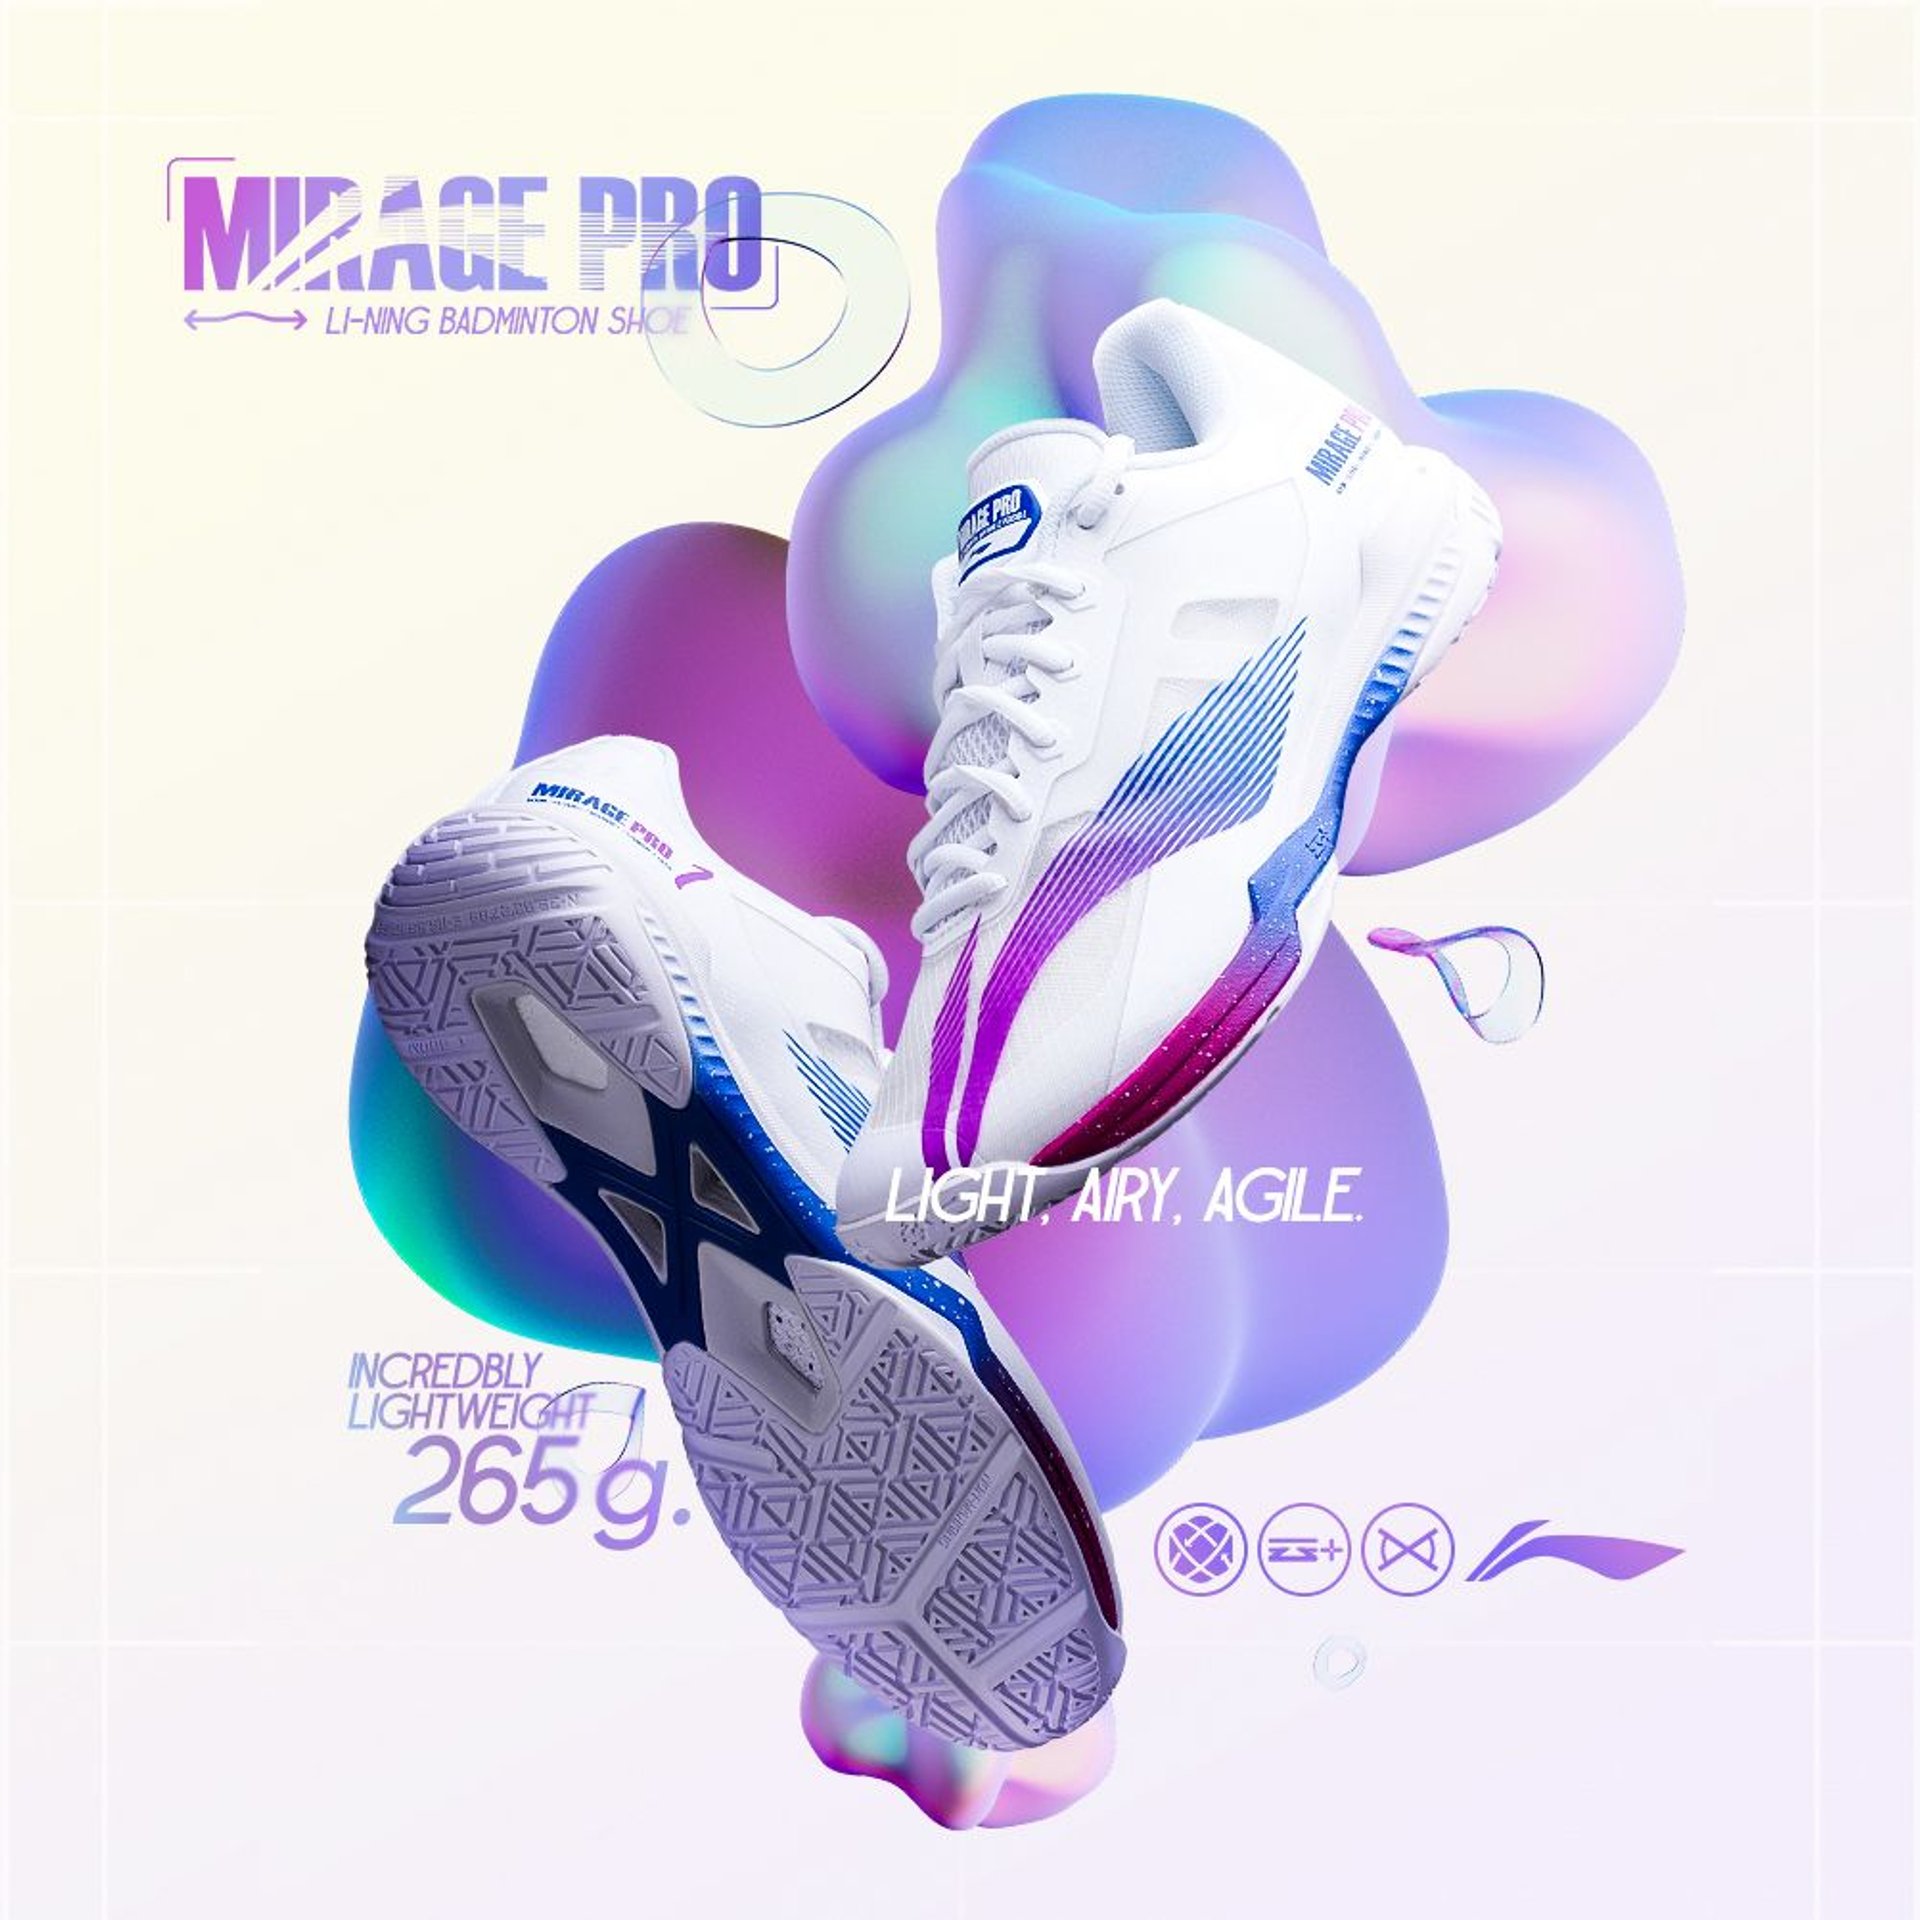 Mirage Pro - Badminton Shoe